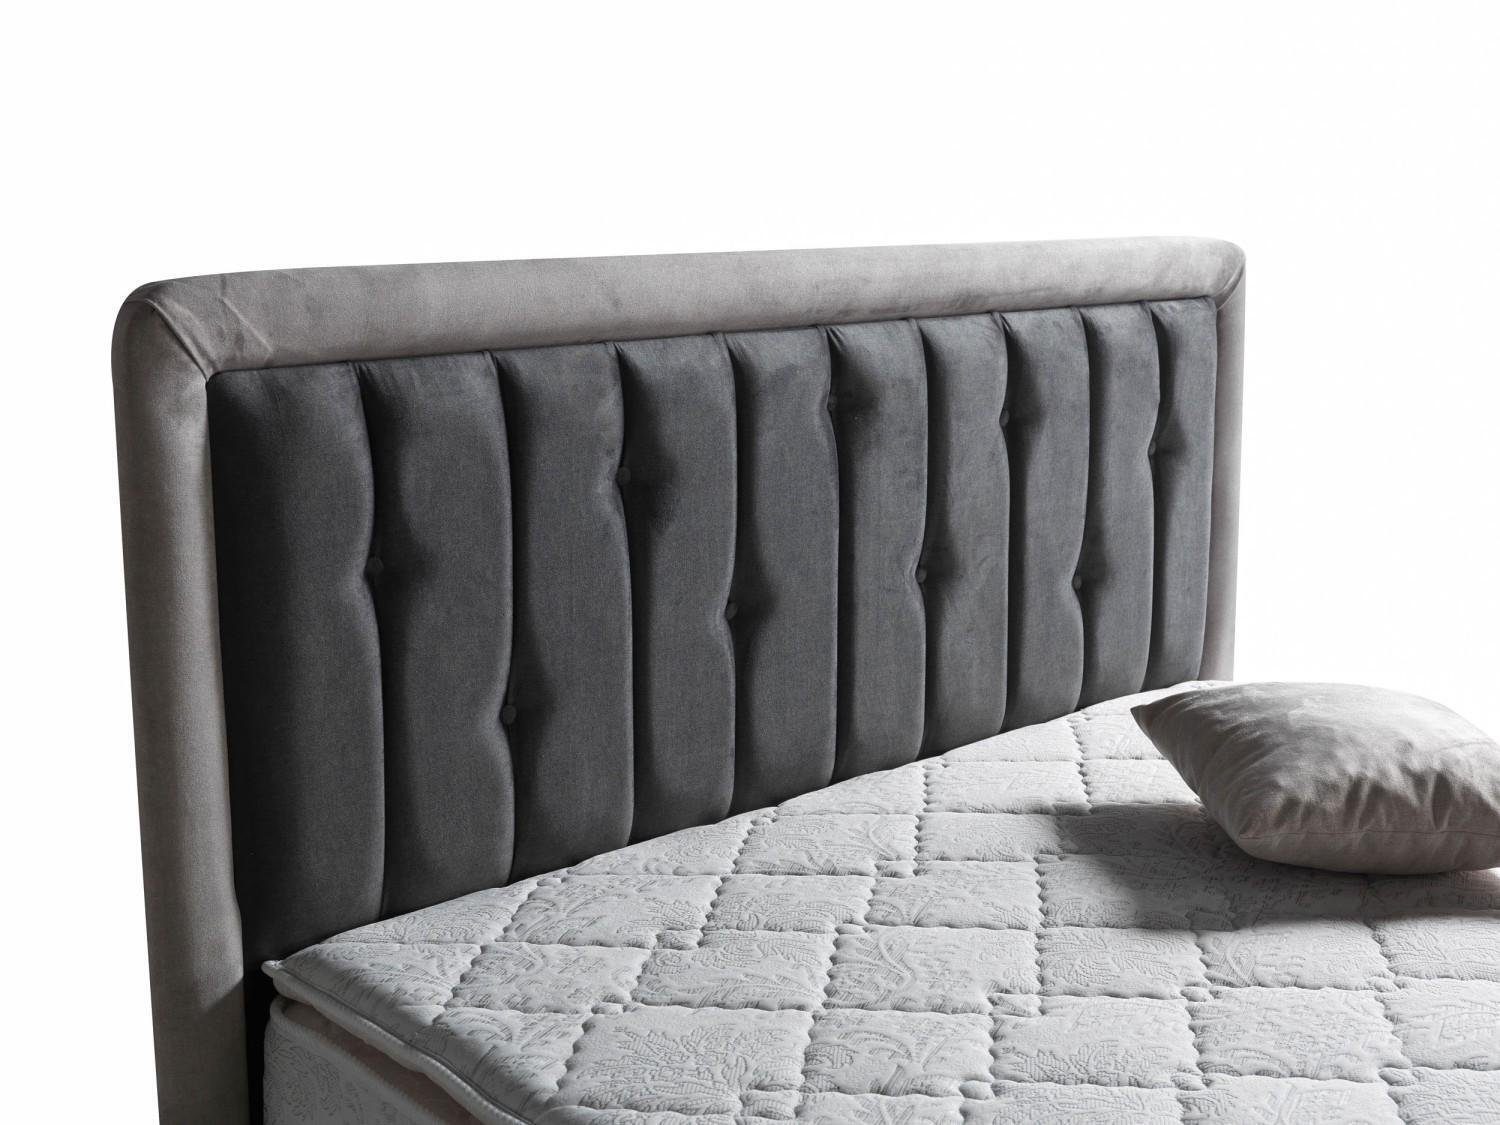 Bett (Bett), 180x200 Europe Luxus In Polster Doppelbett Betten JVmoebel Bett Made Design Schlafzimmer Möbel